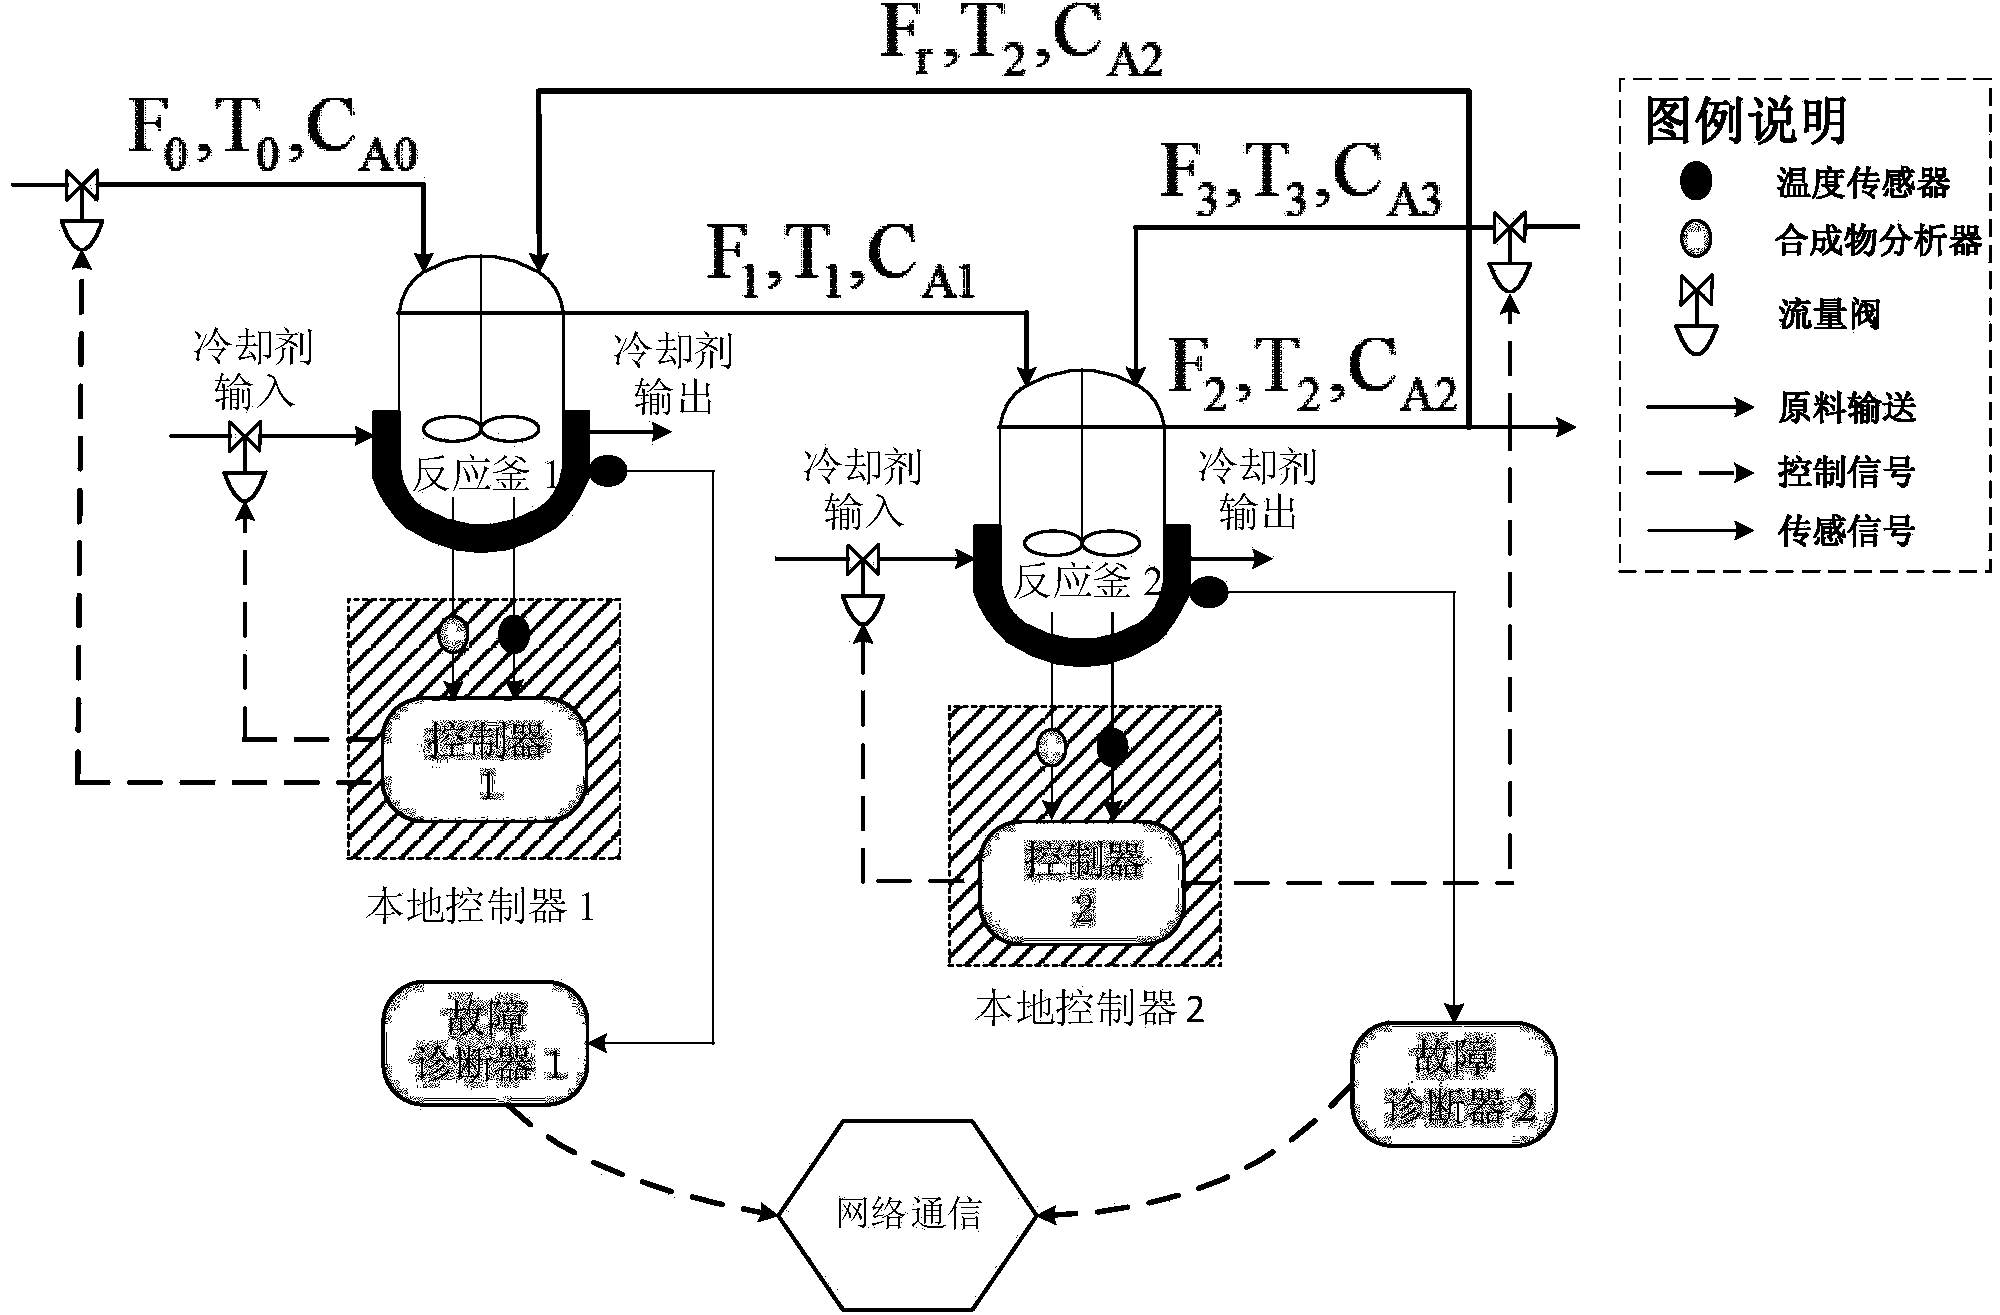 Large-scale reaction kettle distributed fault diagnosis method based on sensor network